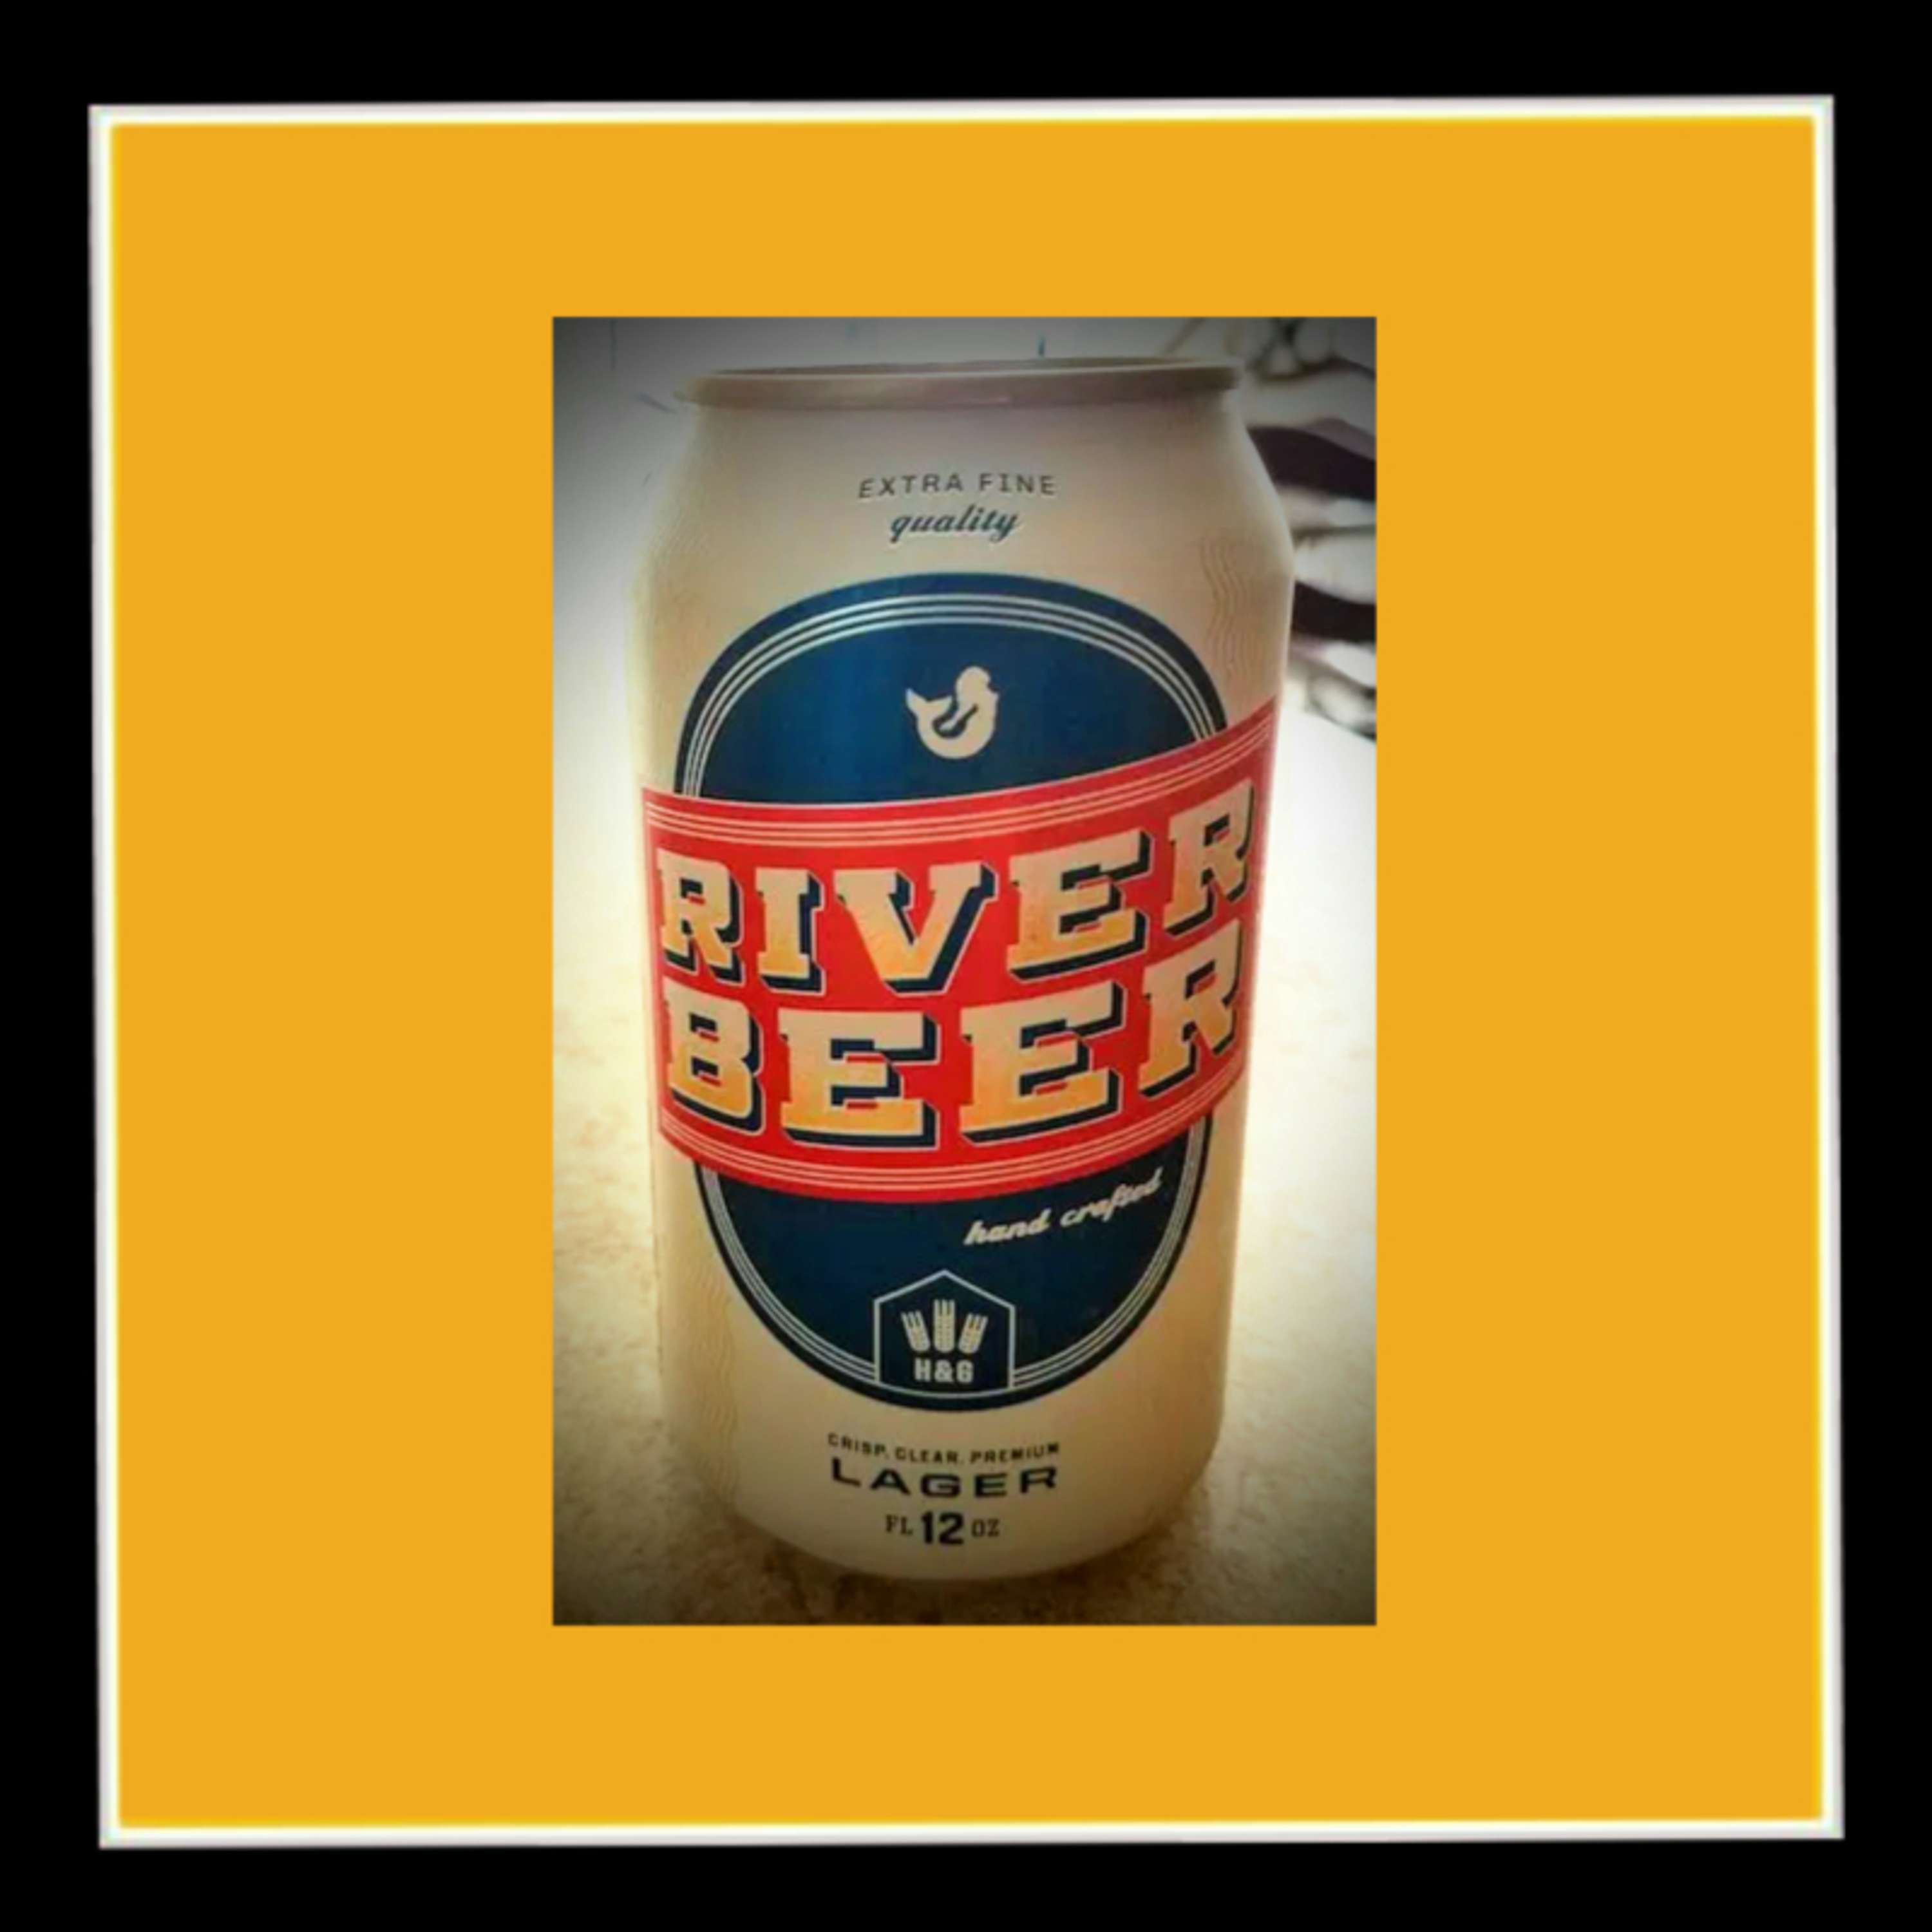 Hops and Grain - River Beer